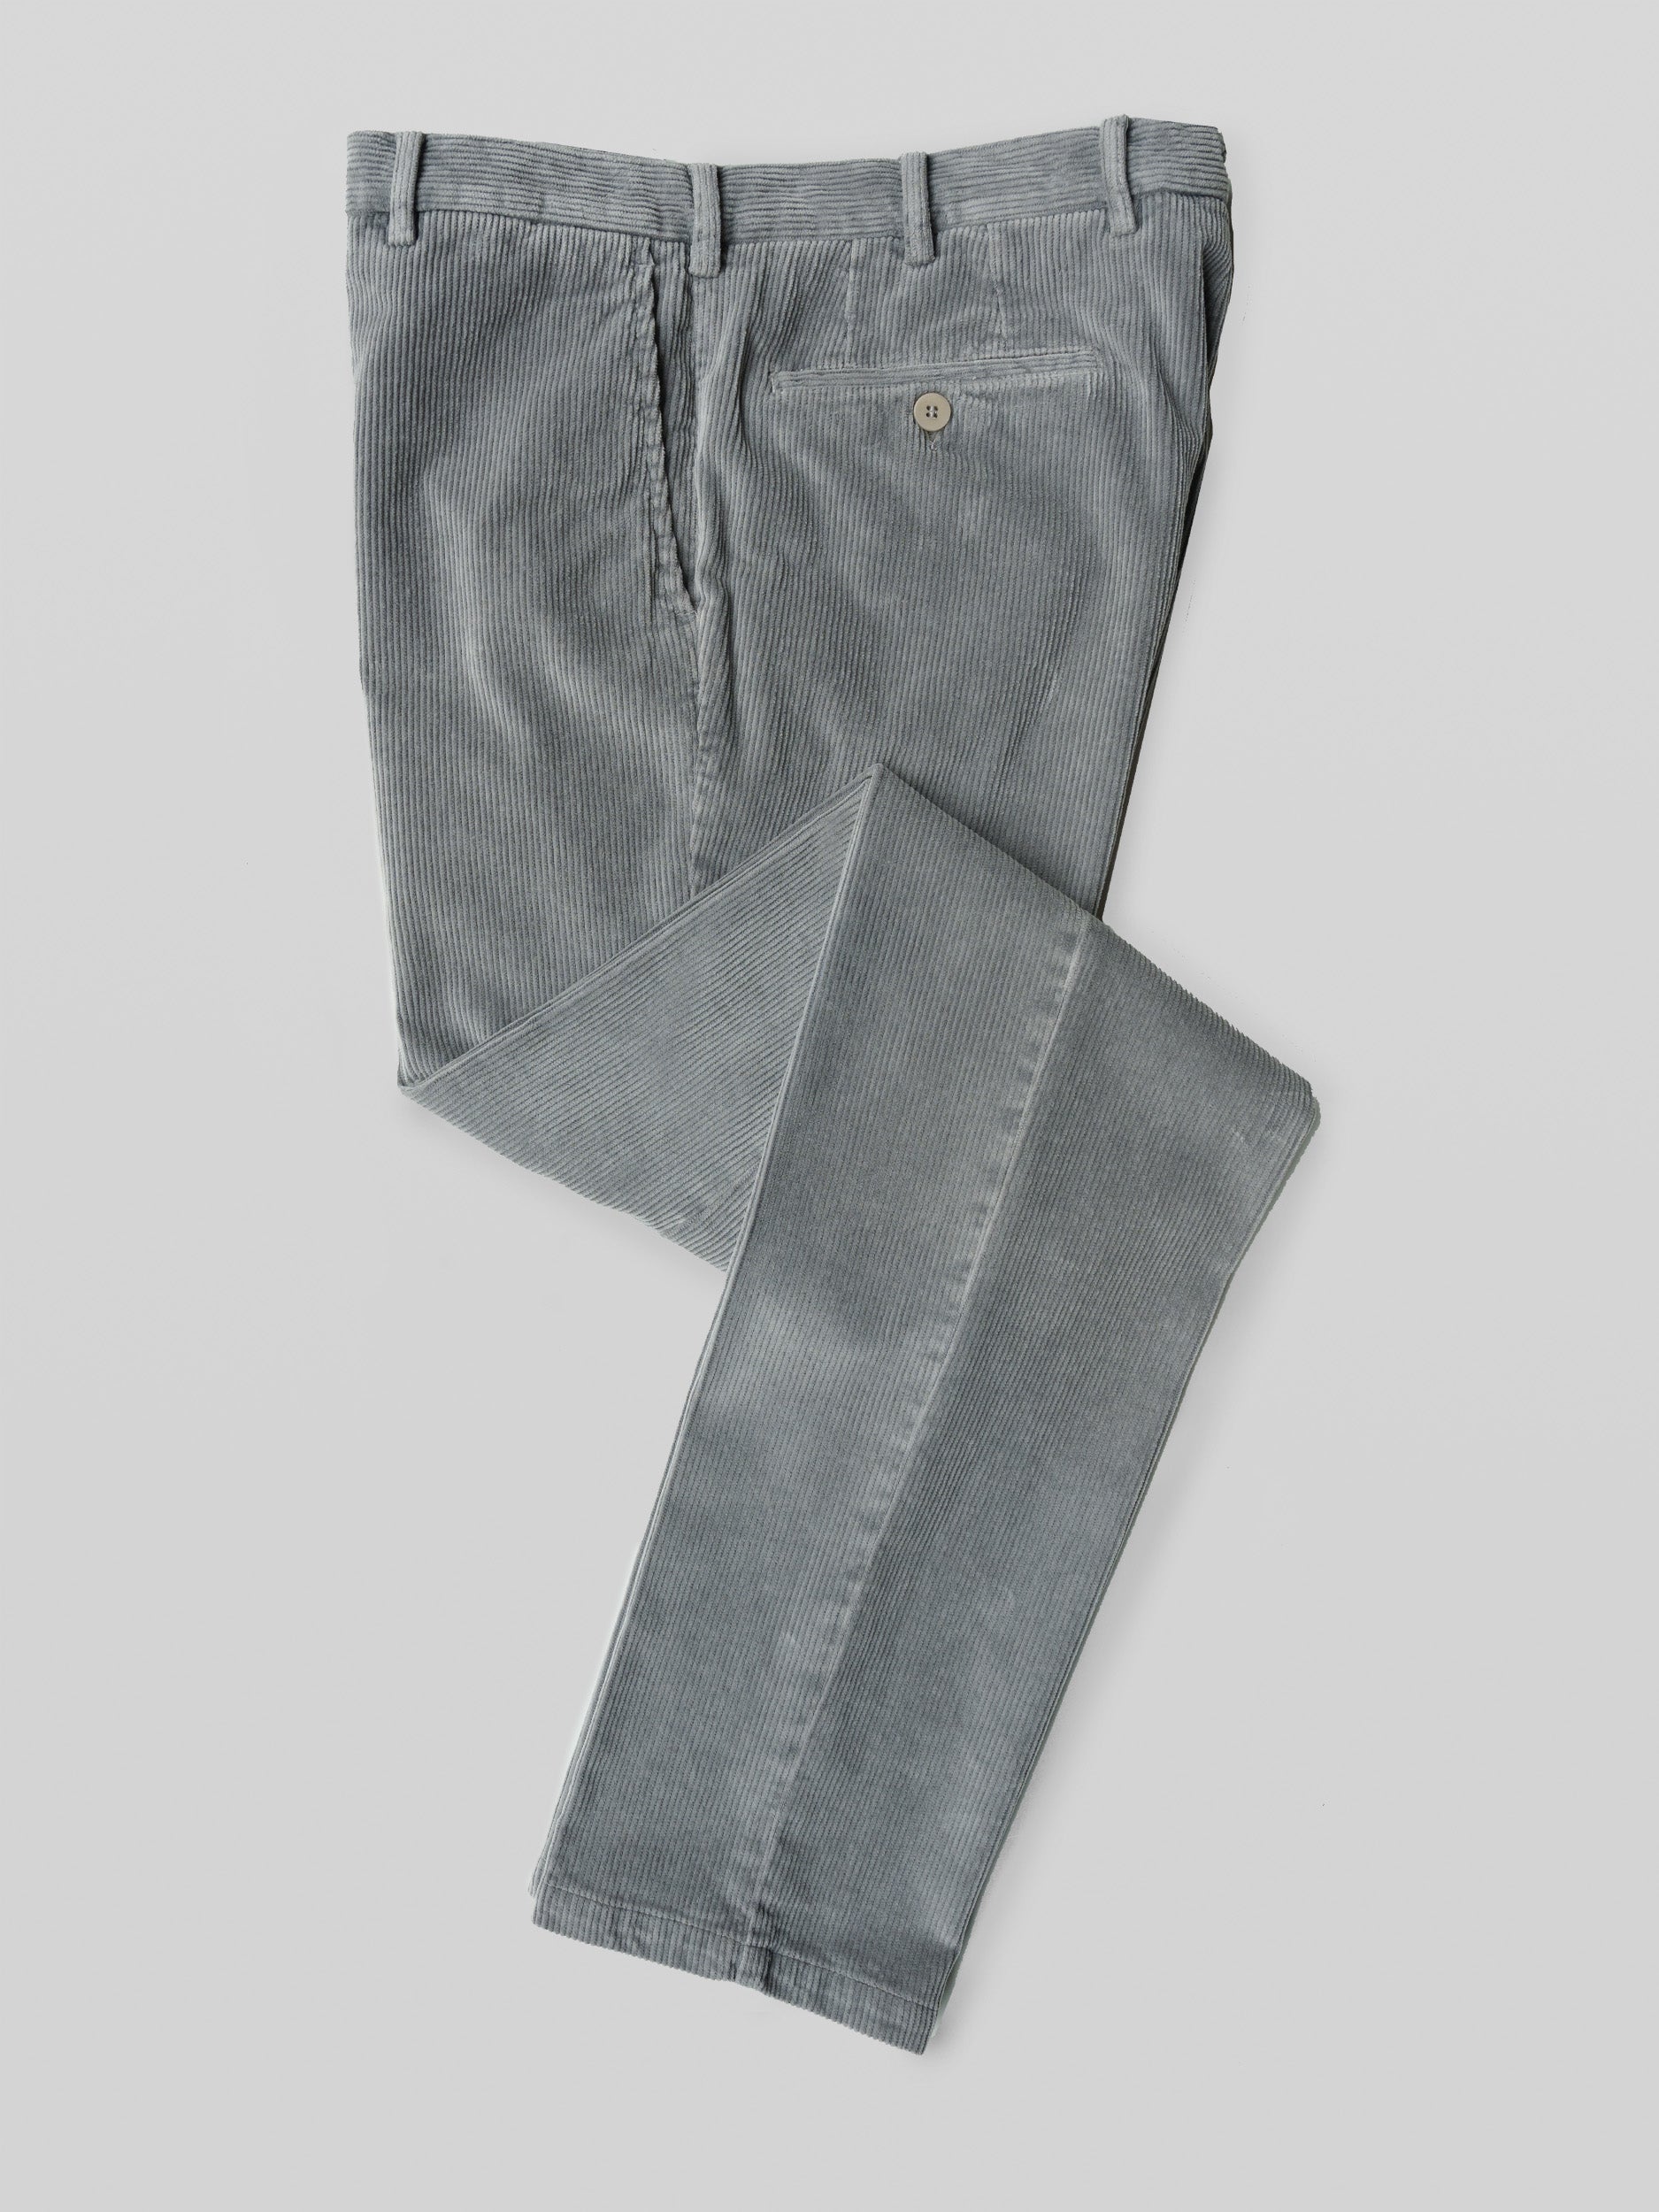 Flair Stone Grey Linen Pant - SNITCH